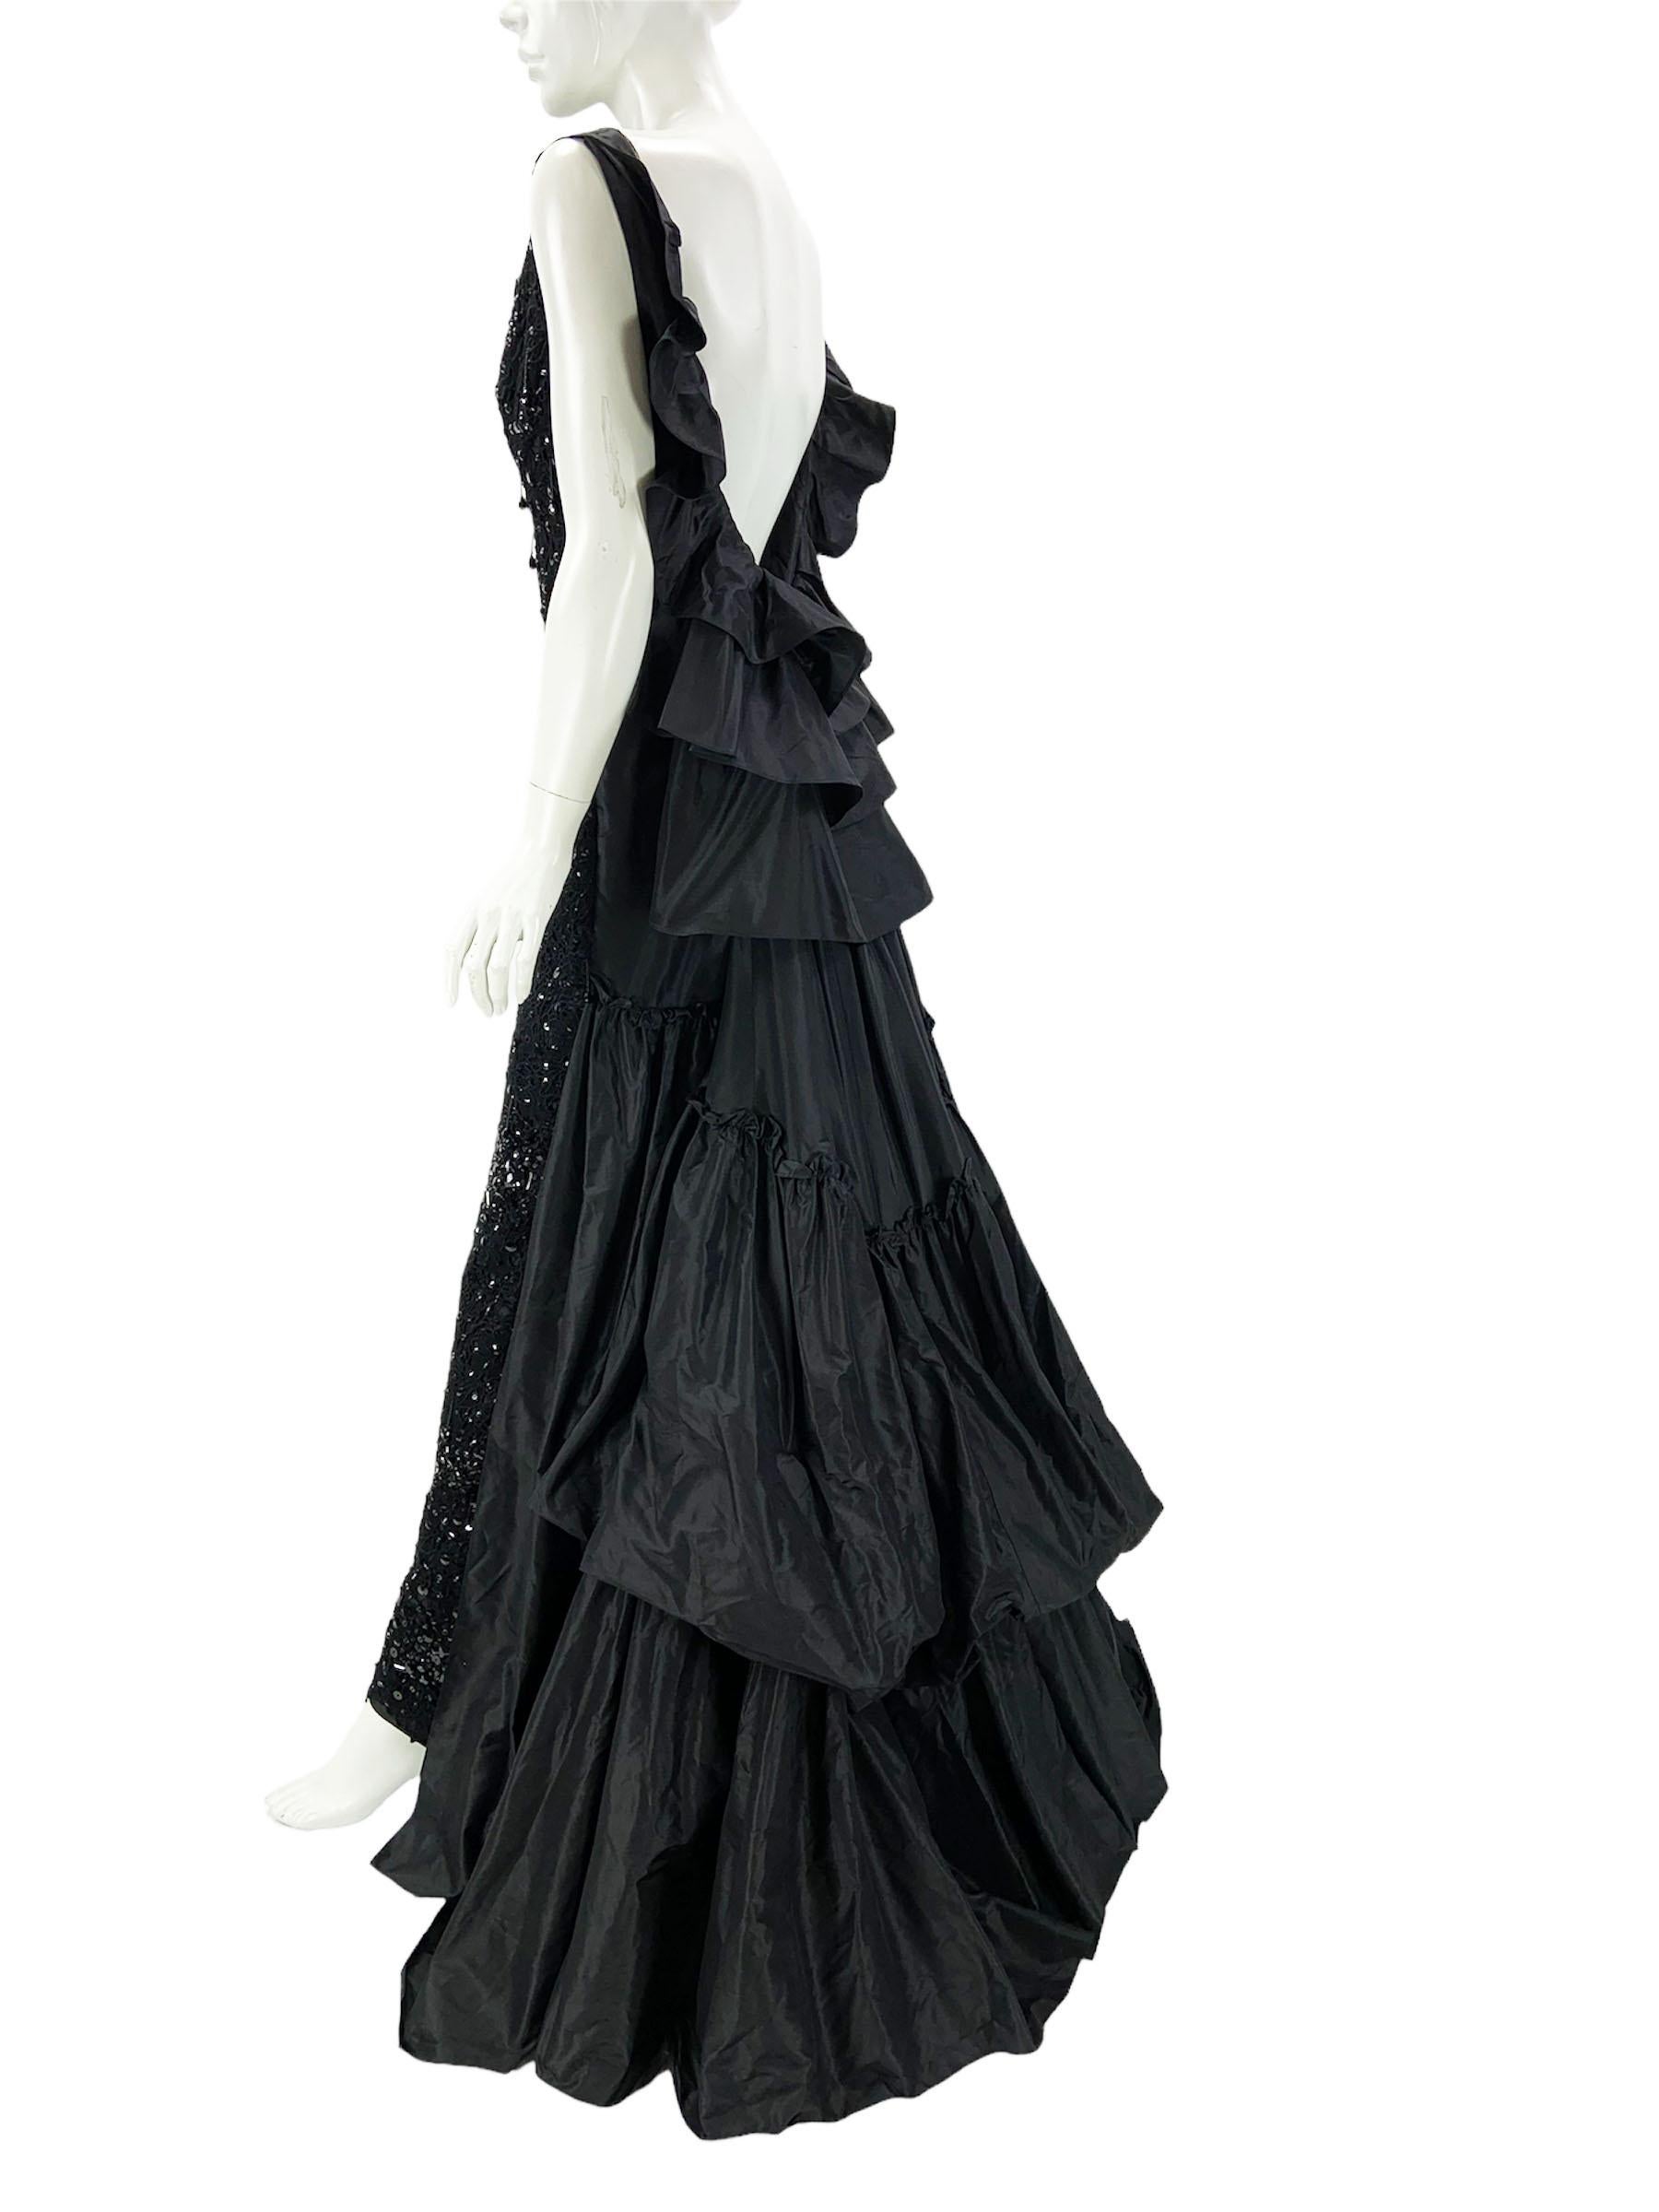 Oscar de la Renta Black Embellished Lace Taffeta Silk Gown Dress US 6 For Sale 1